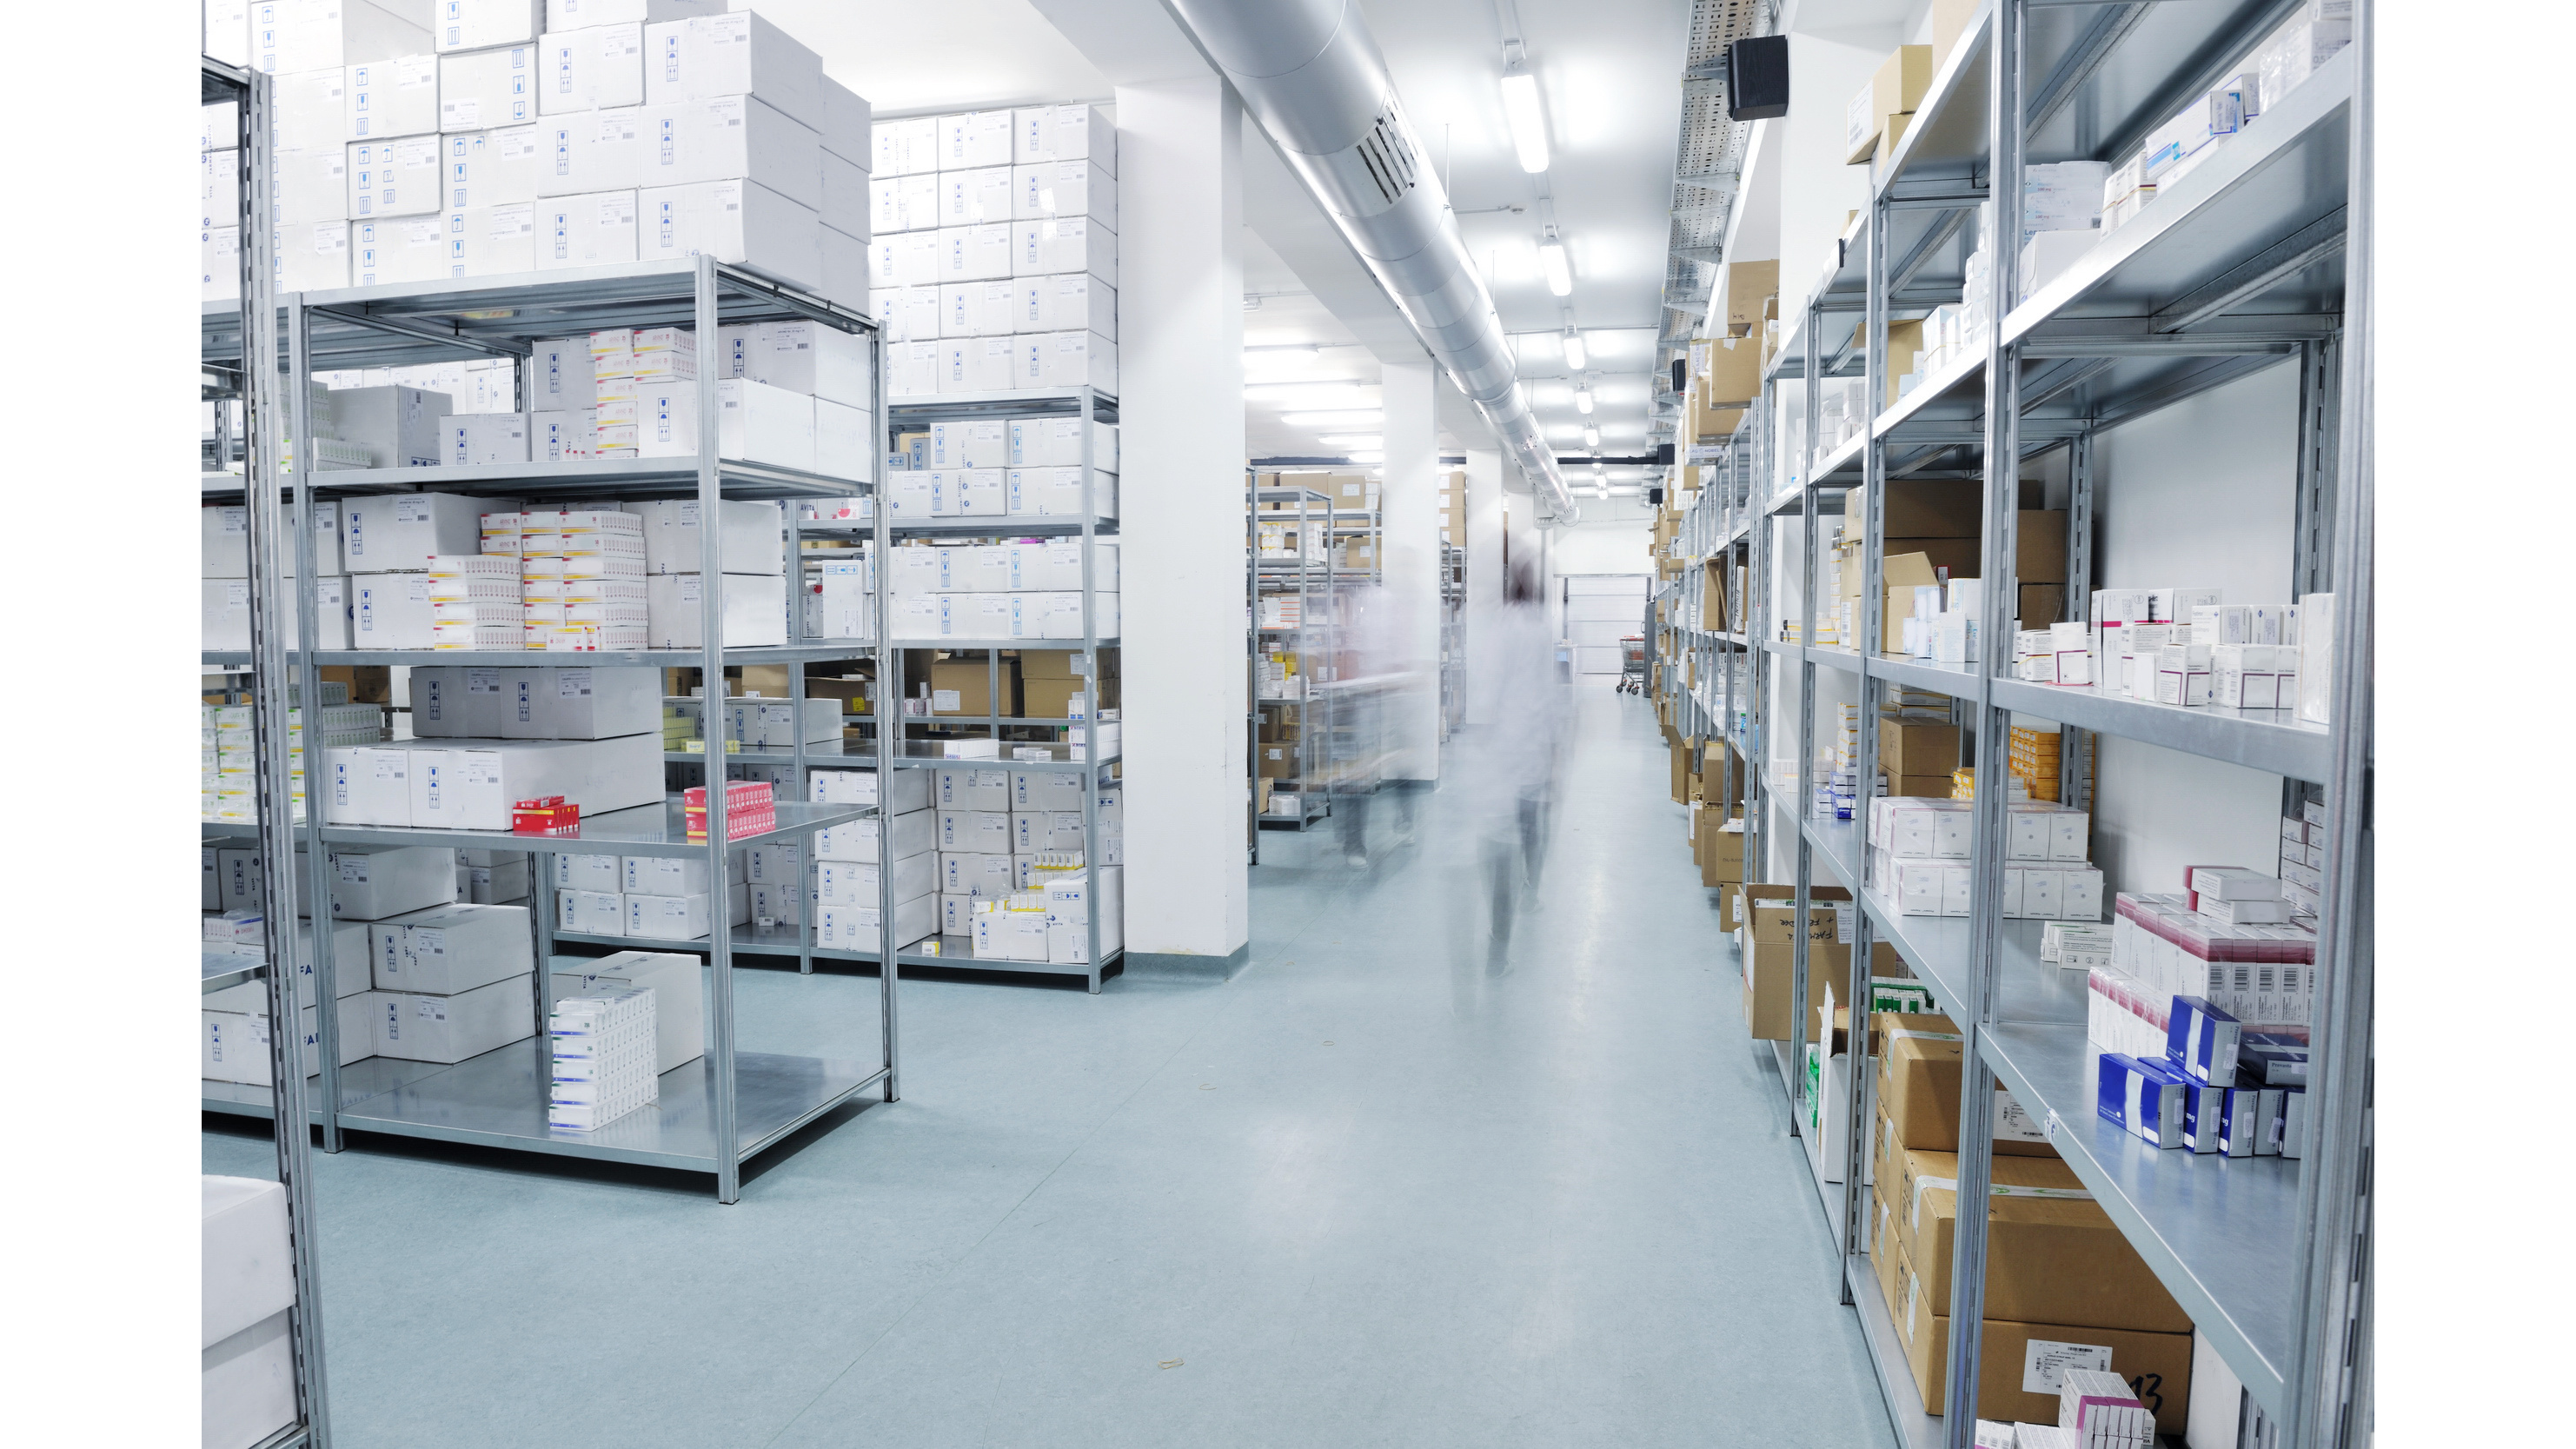 medical factory supplies storage indoor. Image Credit: Adobe Stock Images/shock